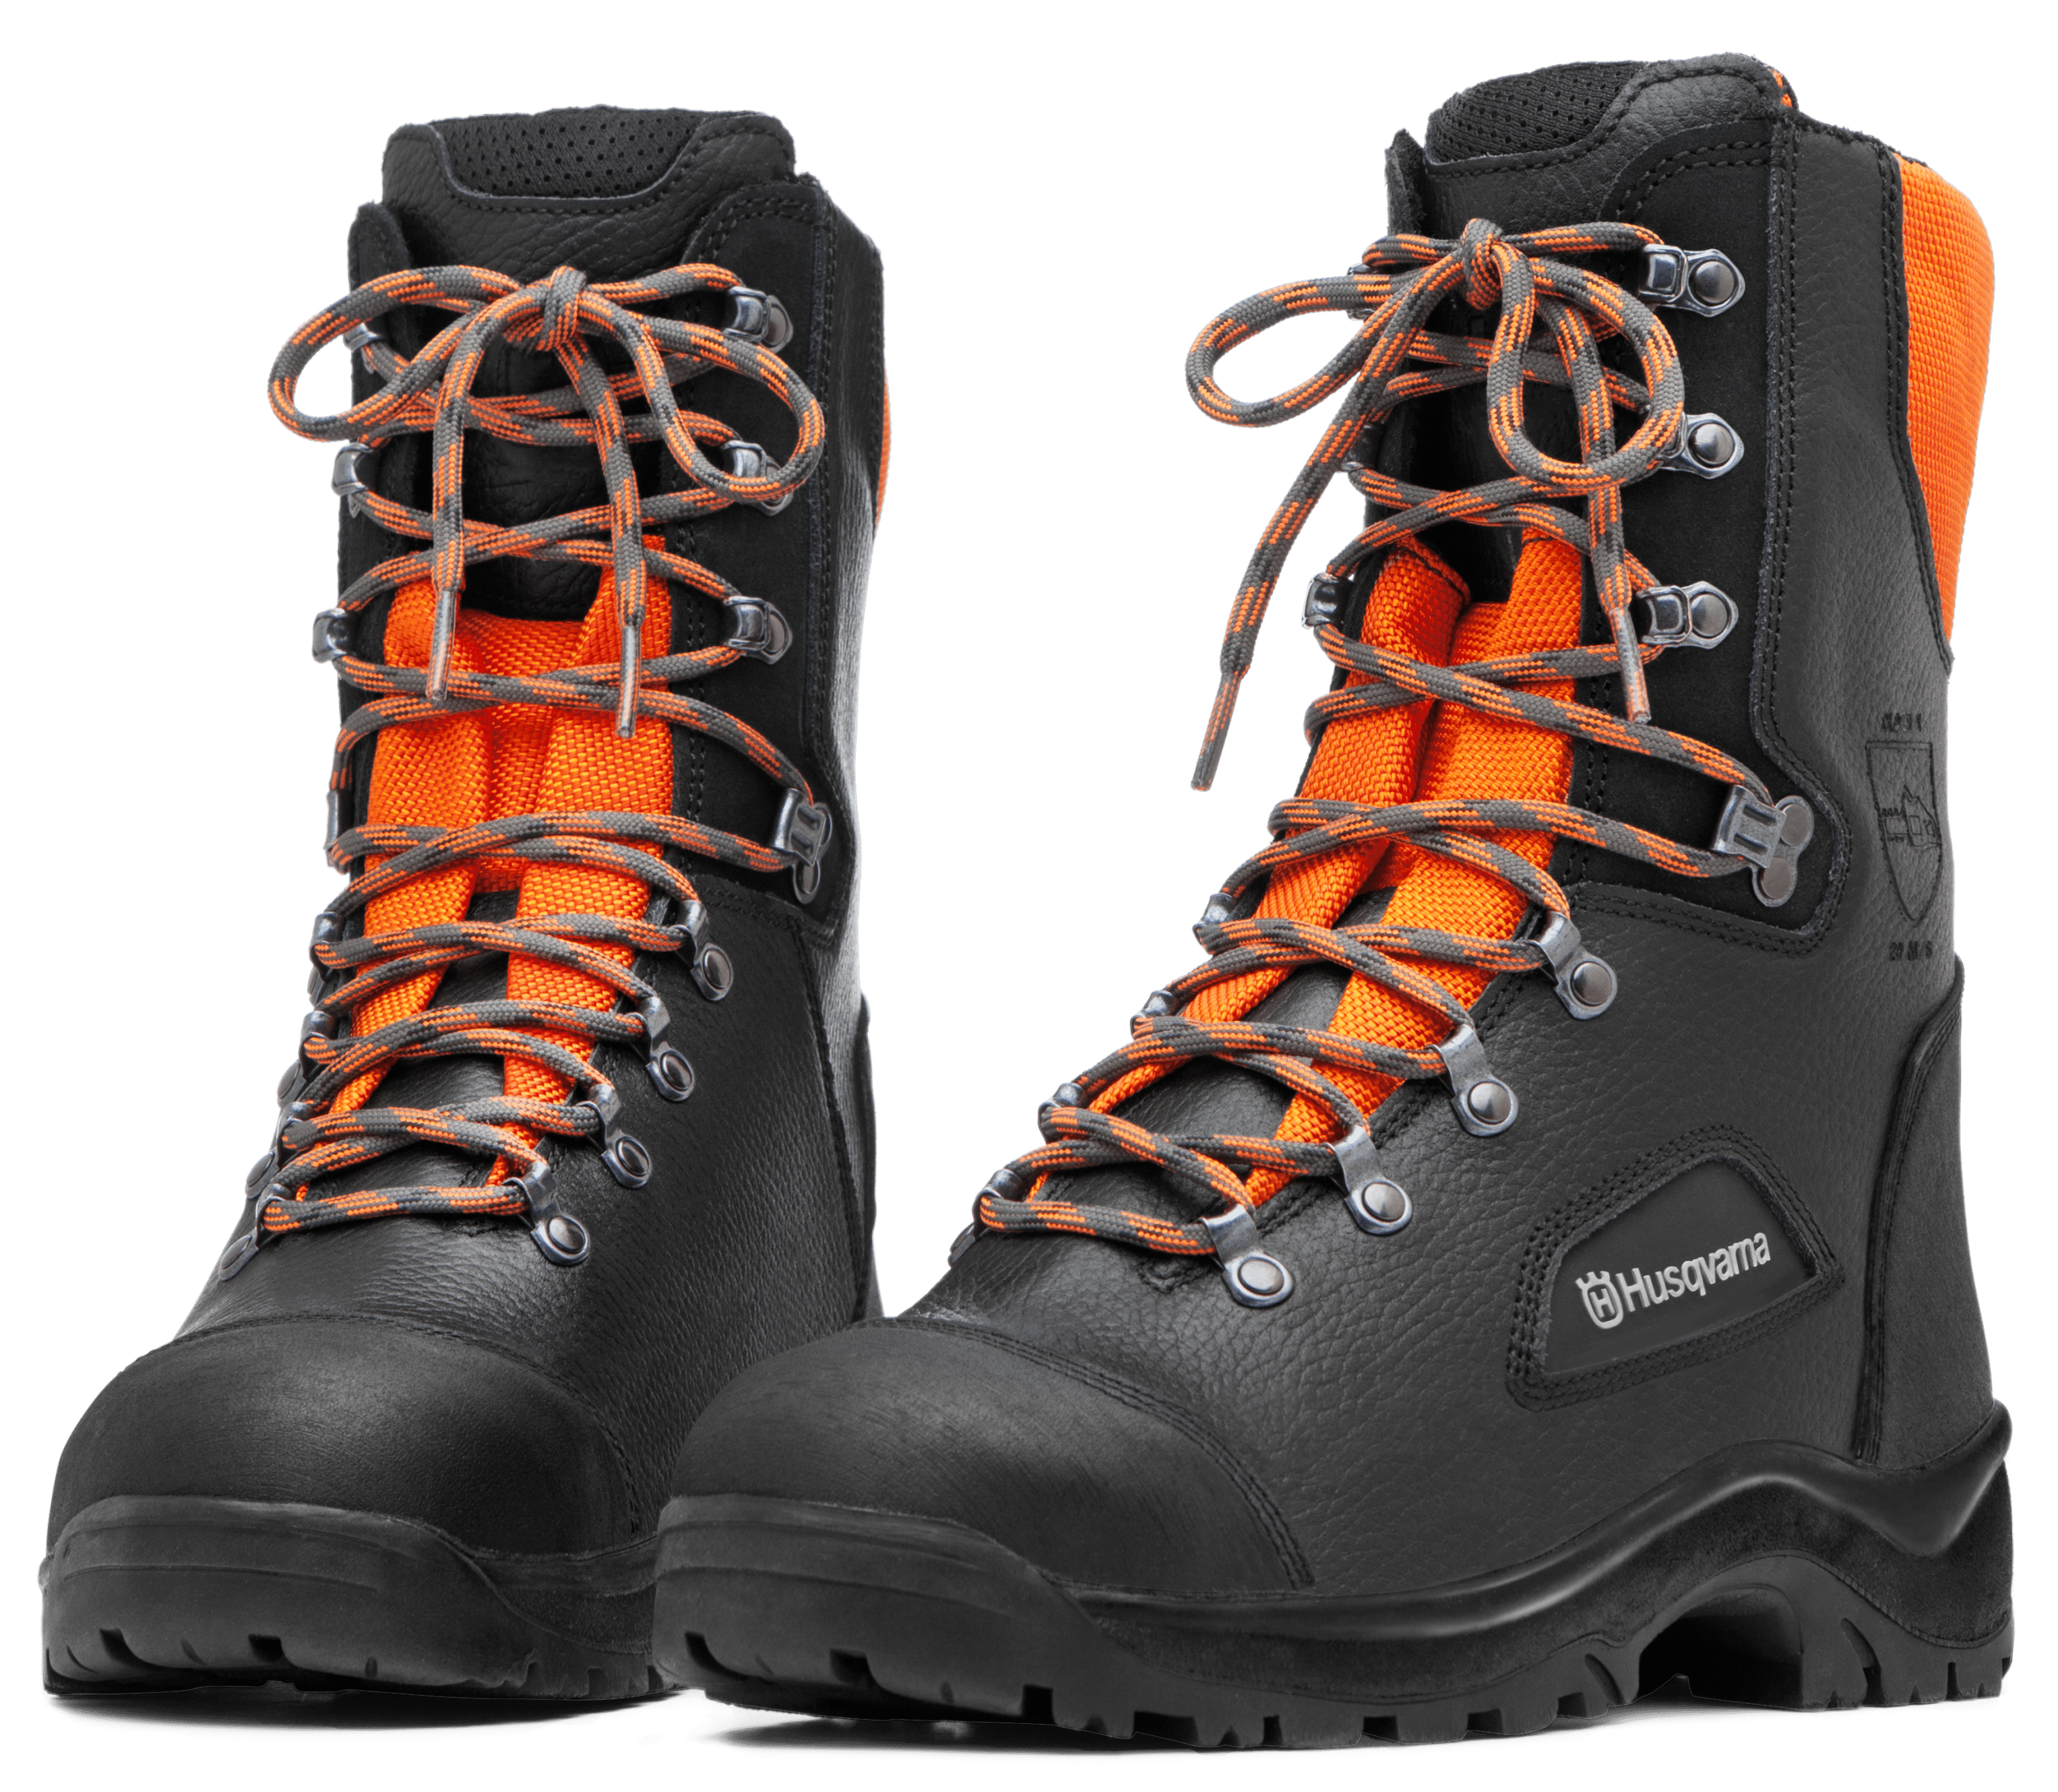 husqvarna protective boots